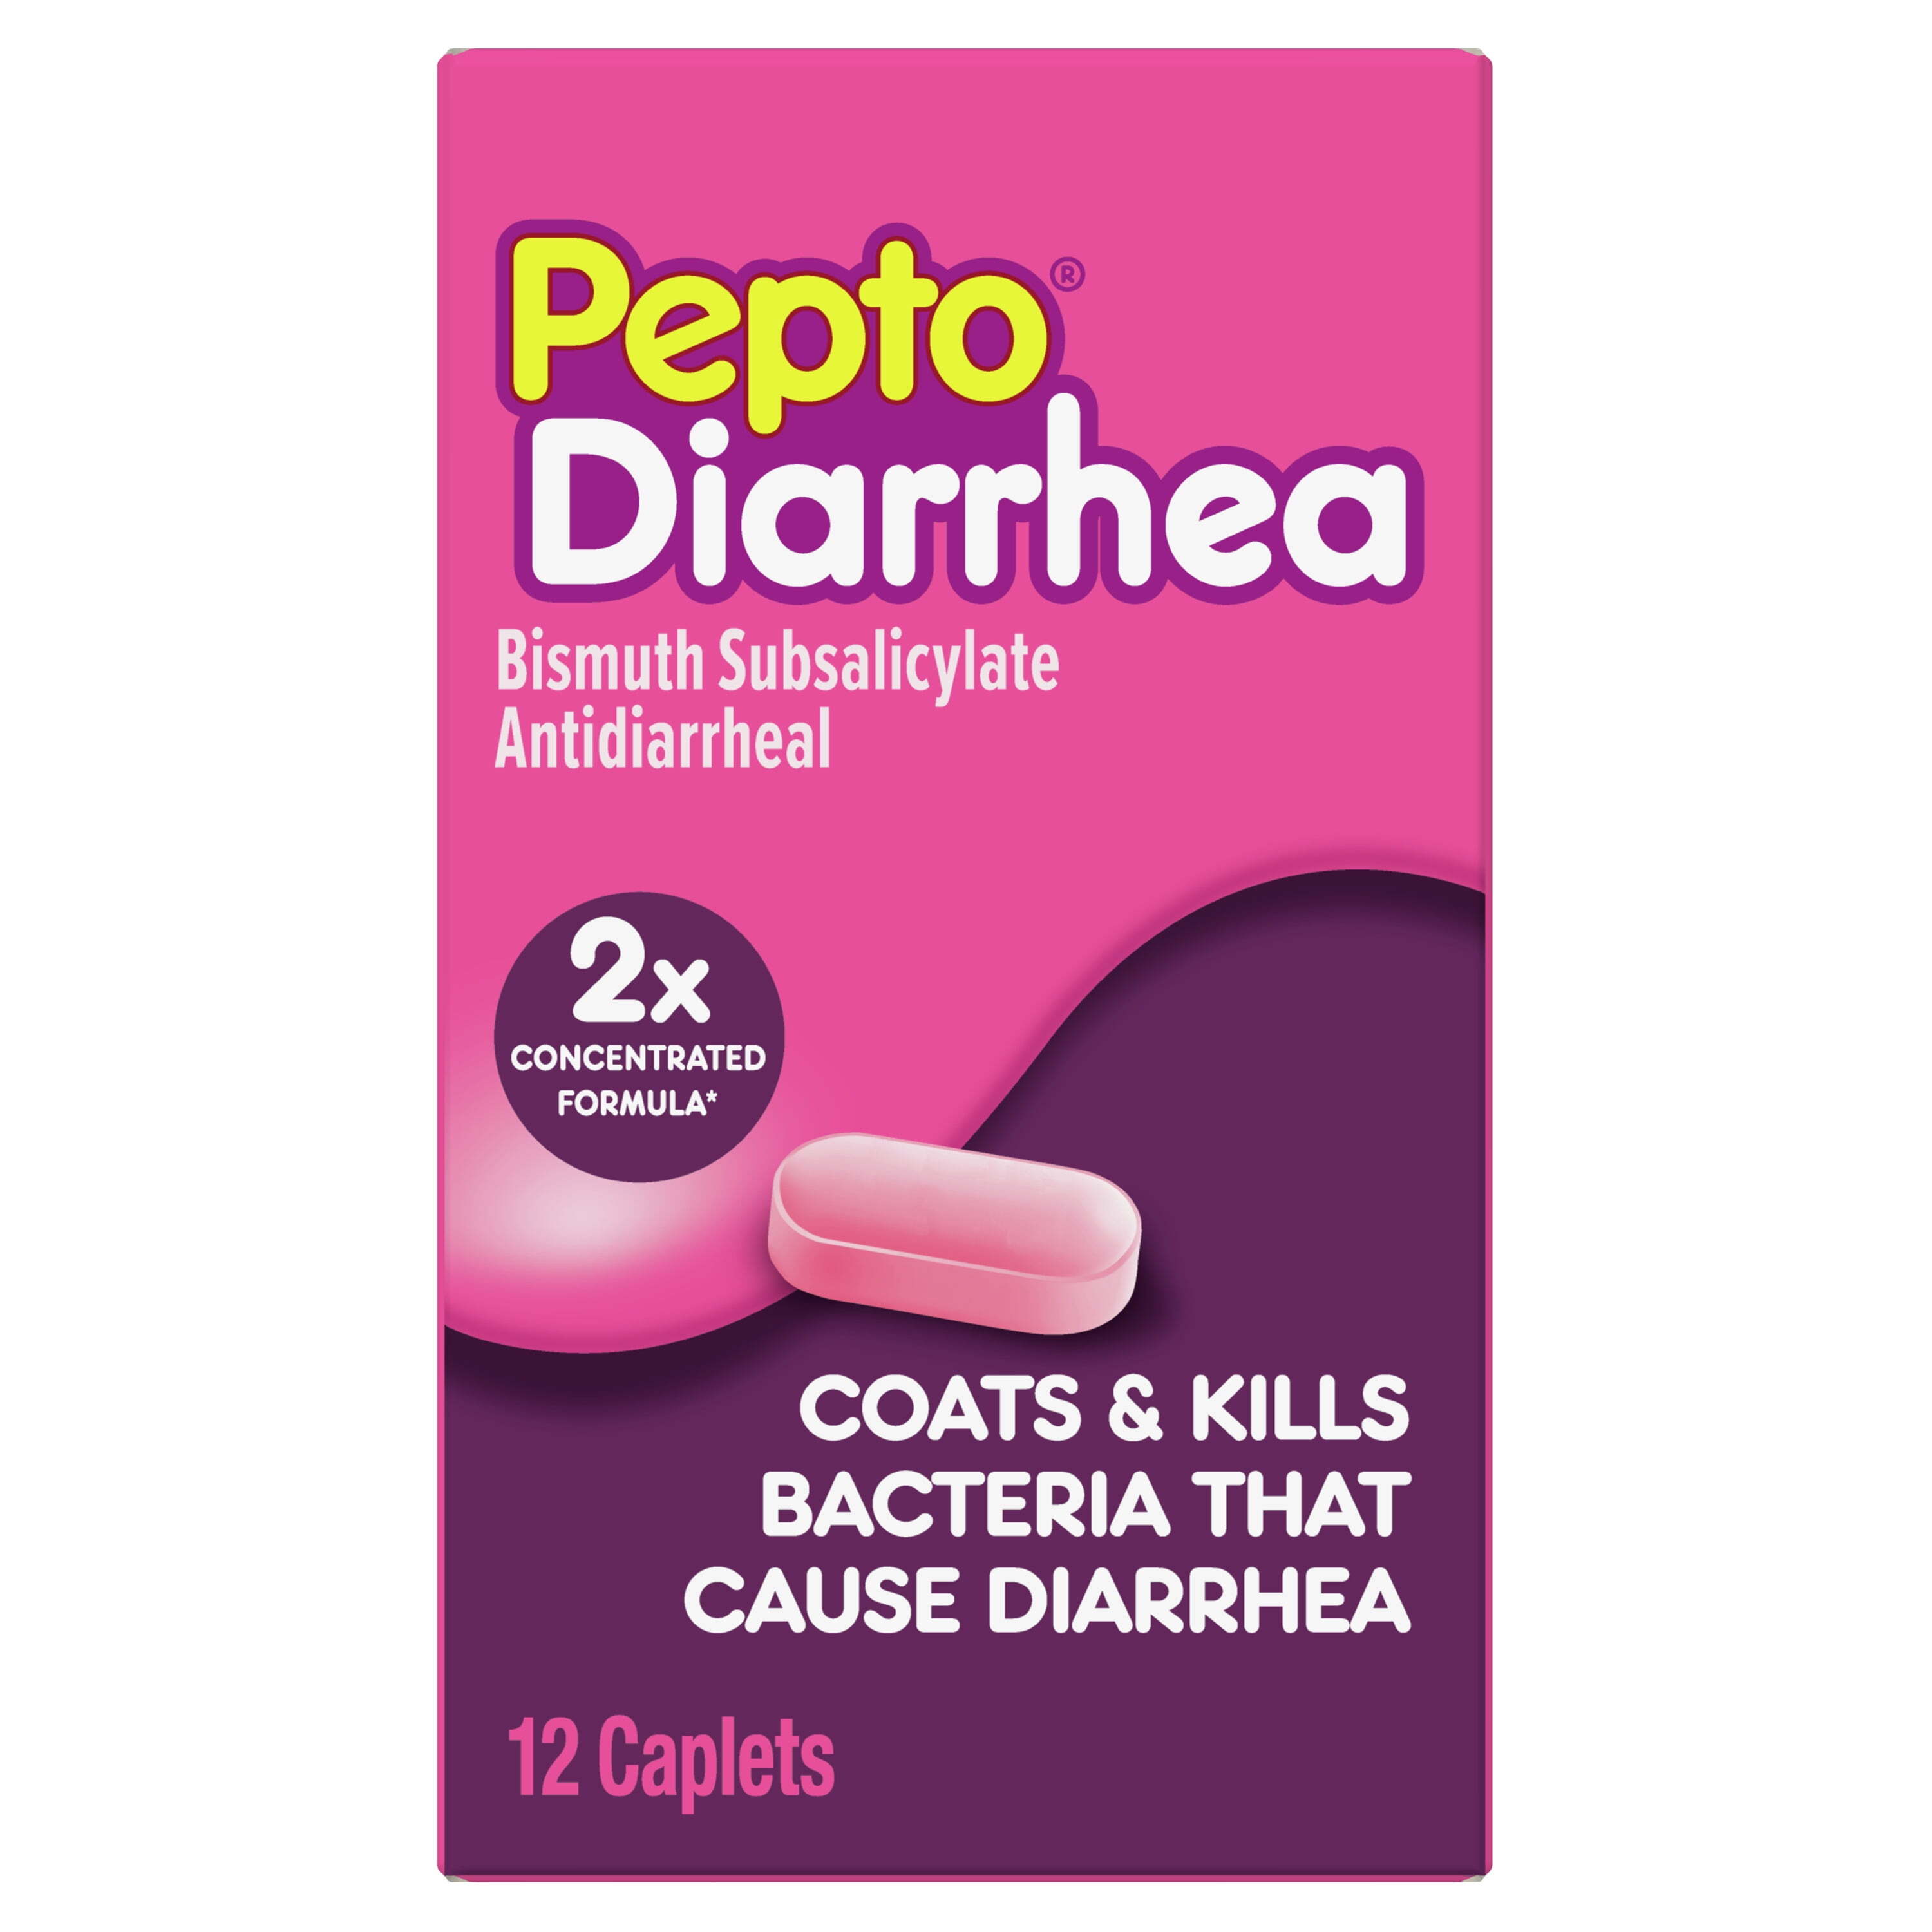 Pepto Bismol Diarrhea Caplets, Fast Anti Diarrhea Relief, over-the-Counter Medicine, 12 Caplets - image 1 of 9